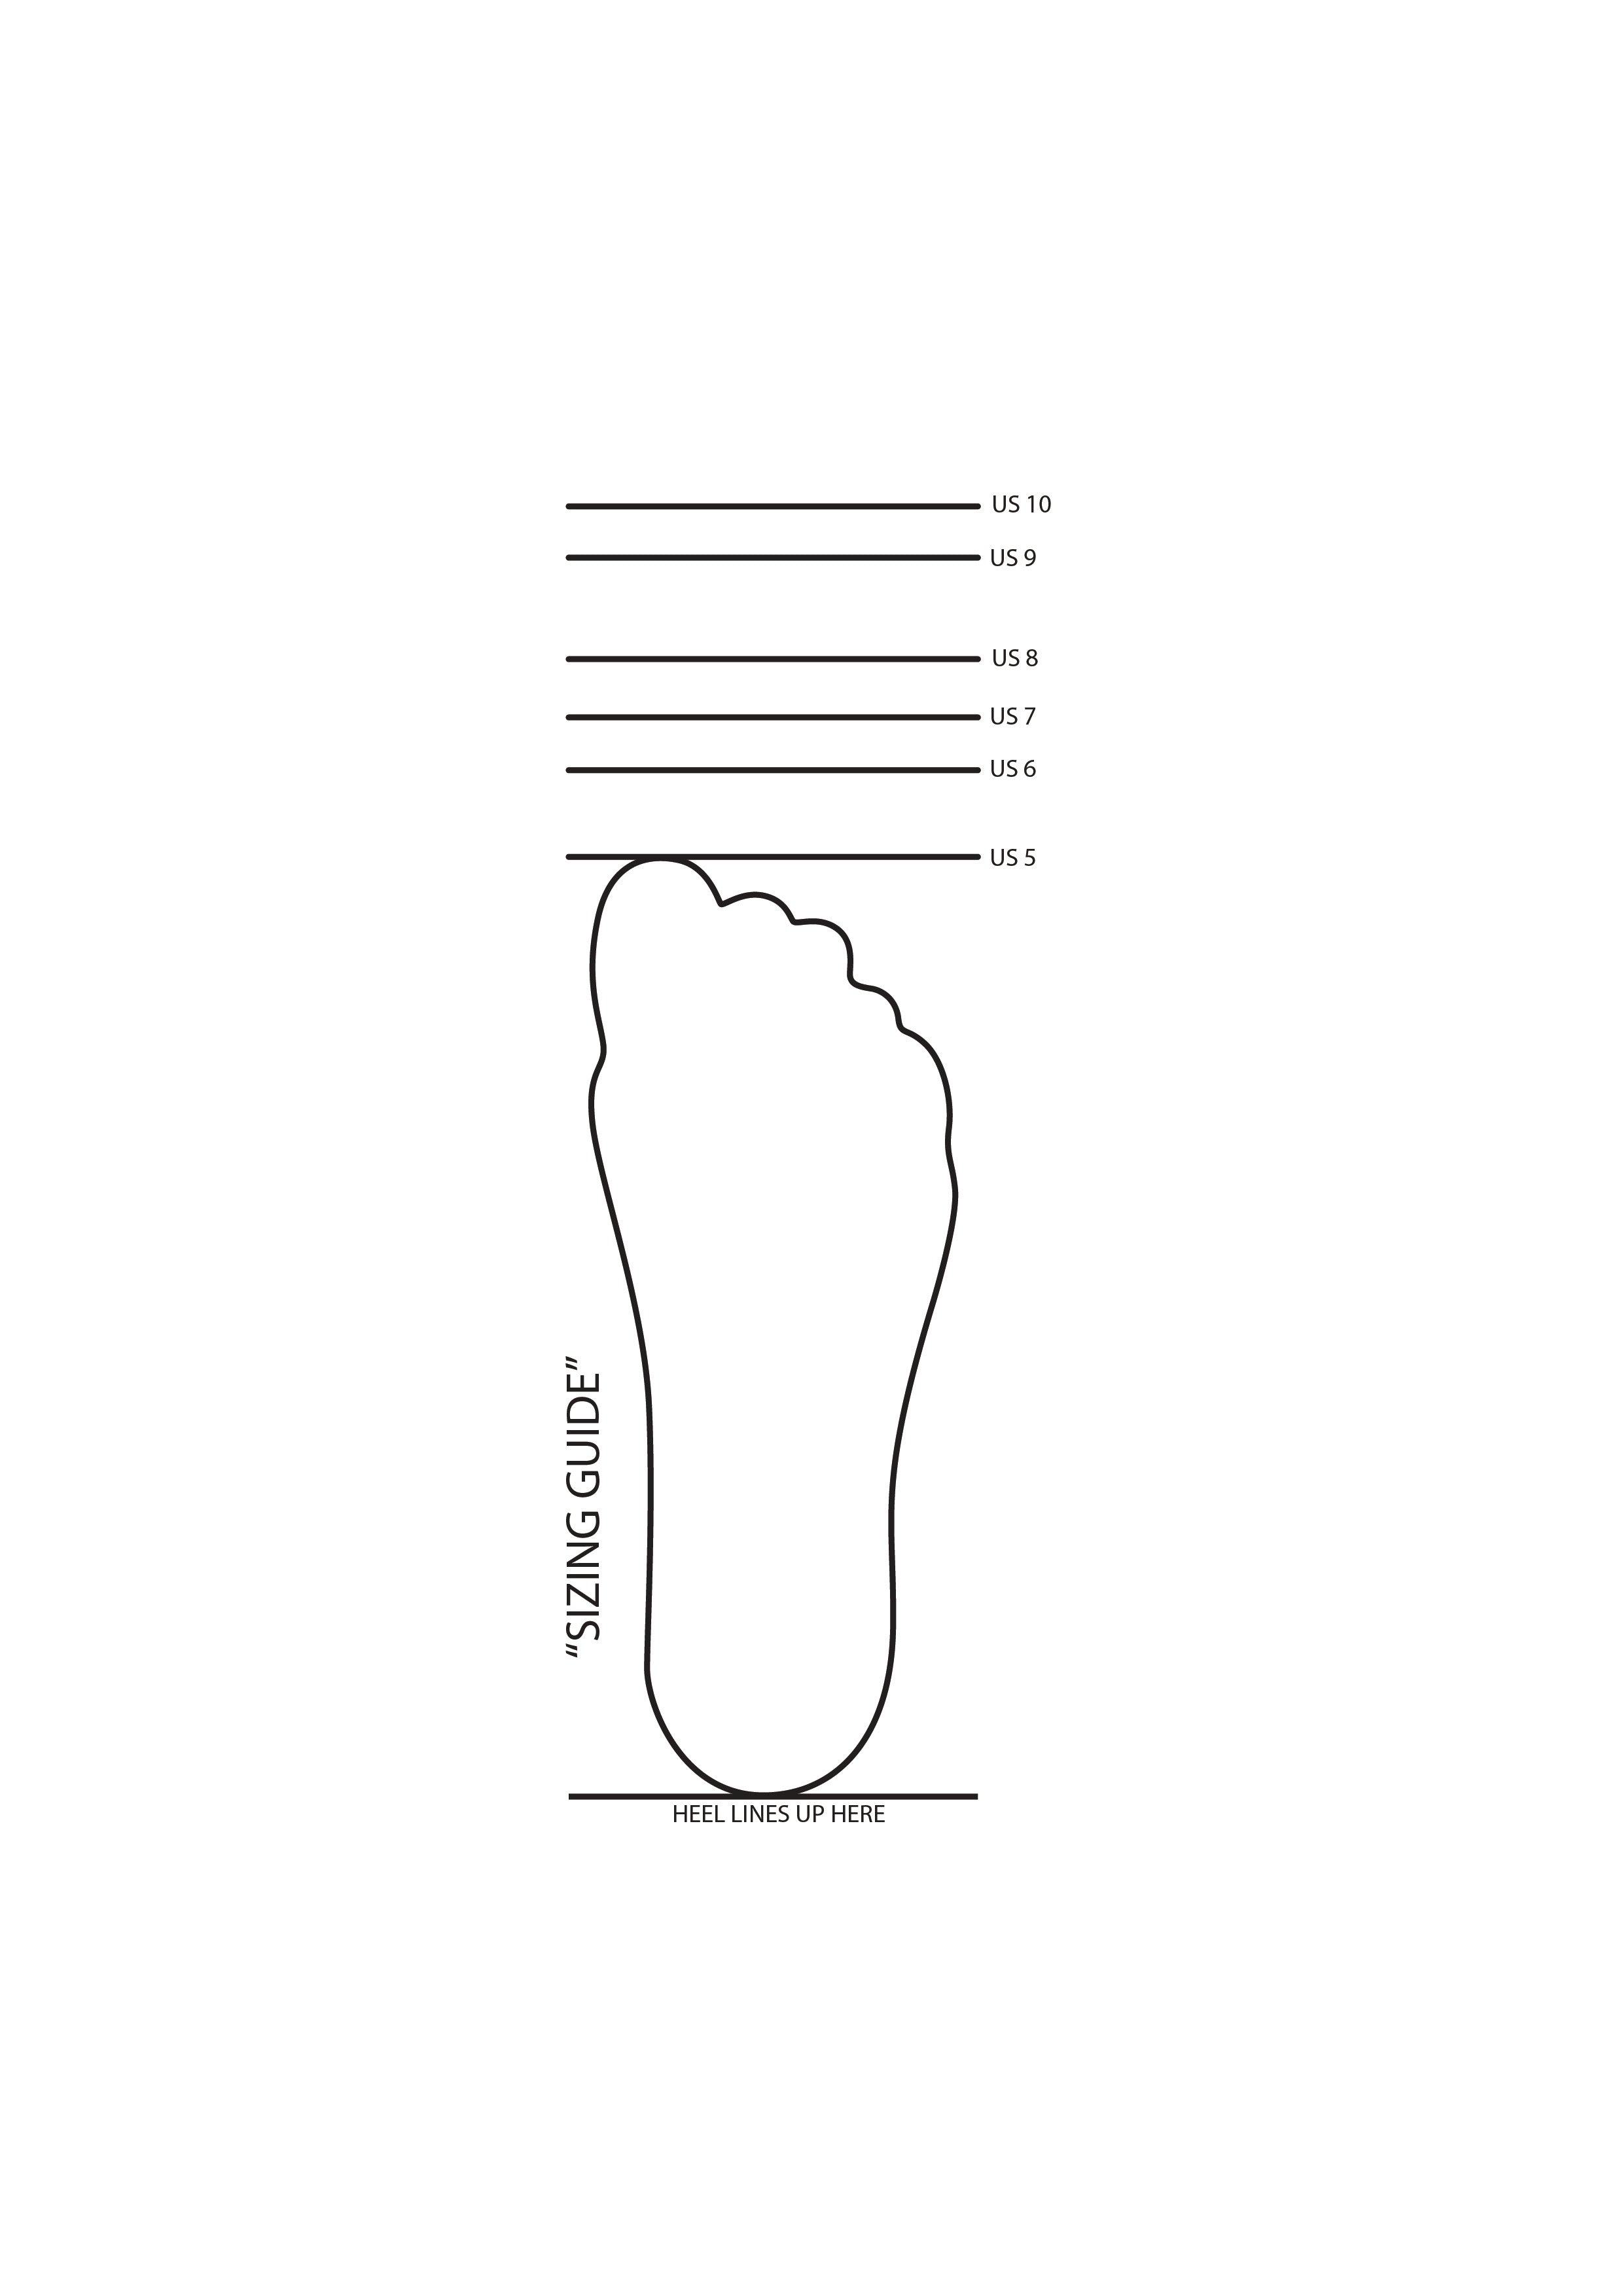 Shoe Size Charts – Ground Up Shop